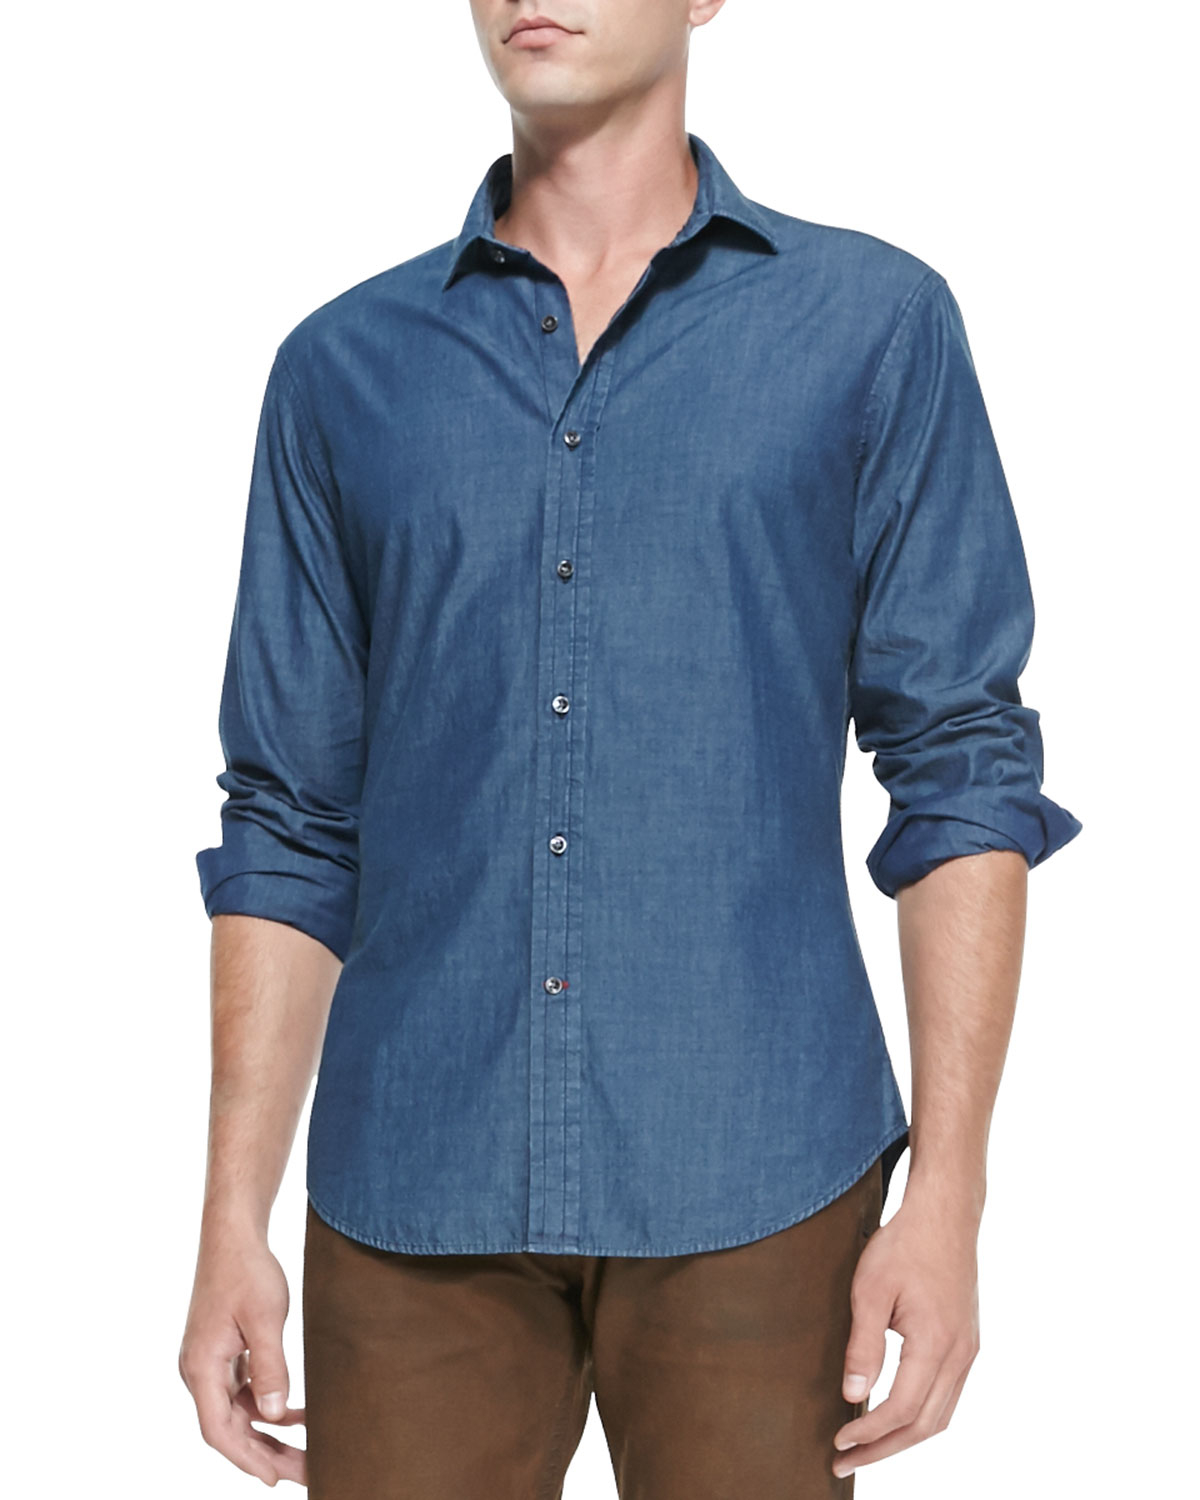 Lyst - Ralph Lauren Black Label Woven Chambray Shirt in Blue for Men